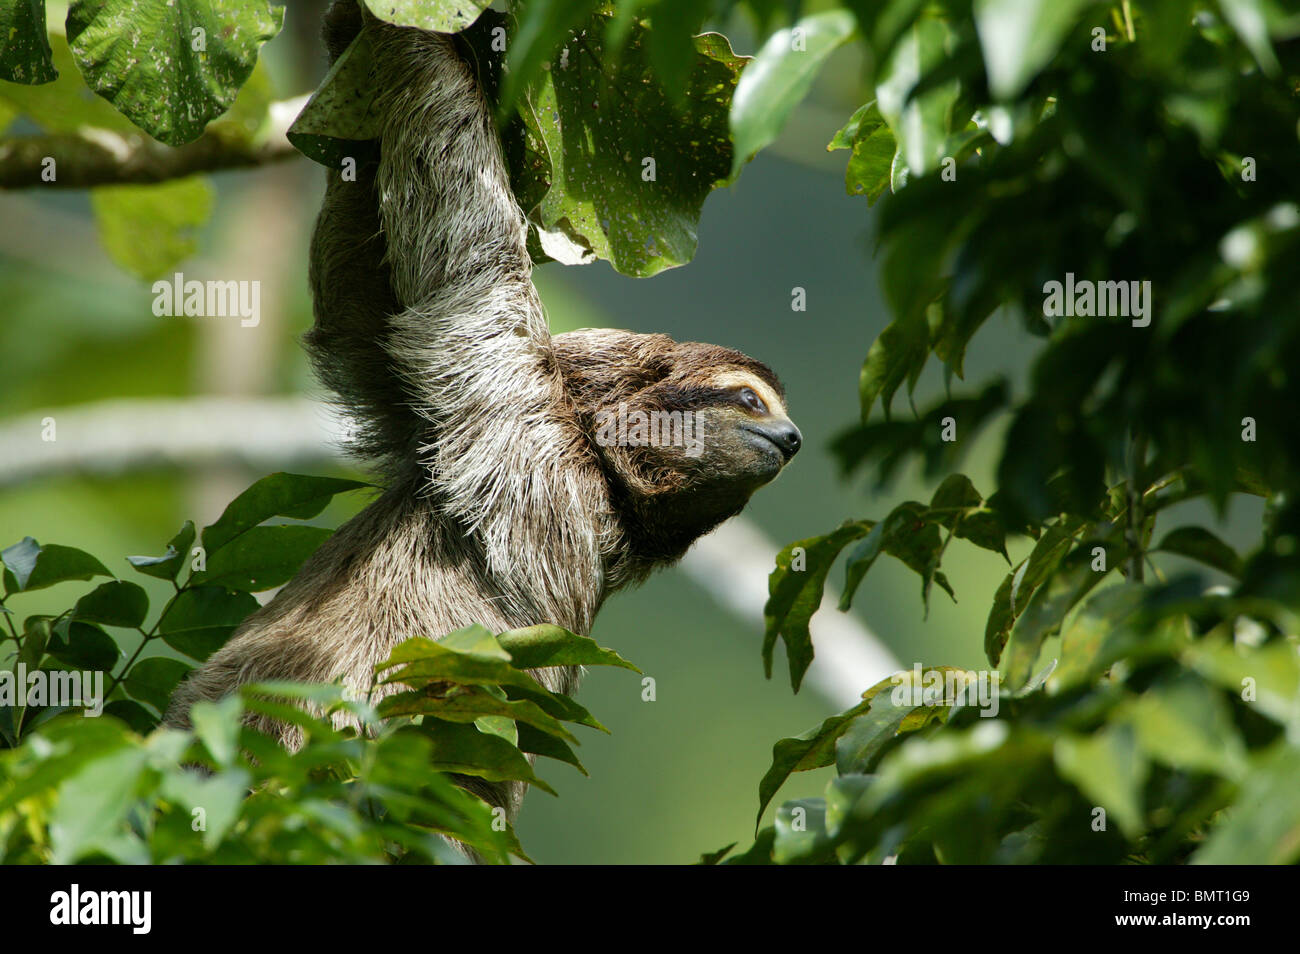 Drei-toed Sloth, Bradypus variegatus, in der 265 Hektar Regenwald Metropolitan Park, Panama City, Republik Panama. Stockfoto